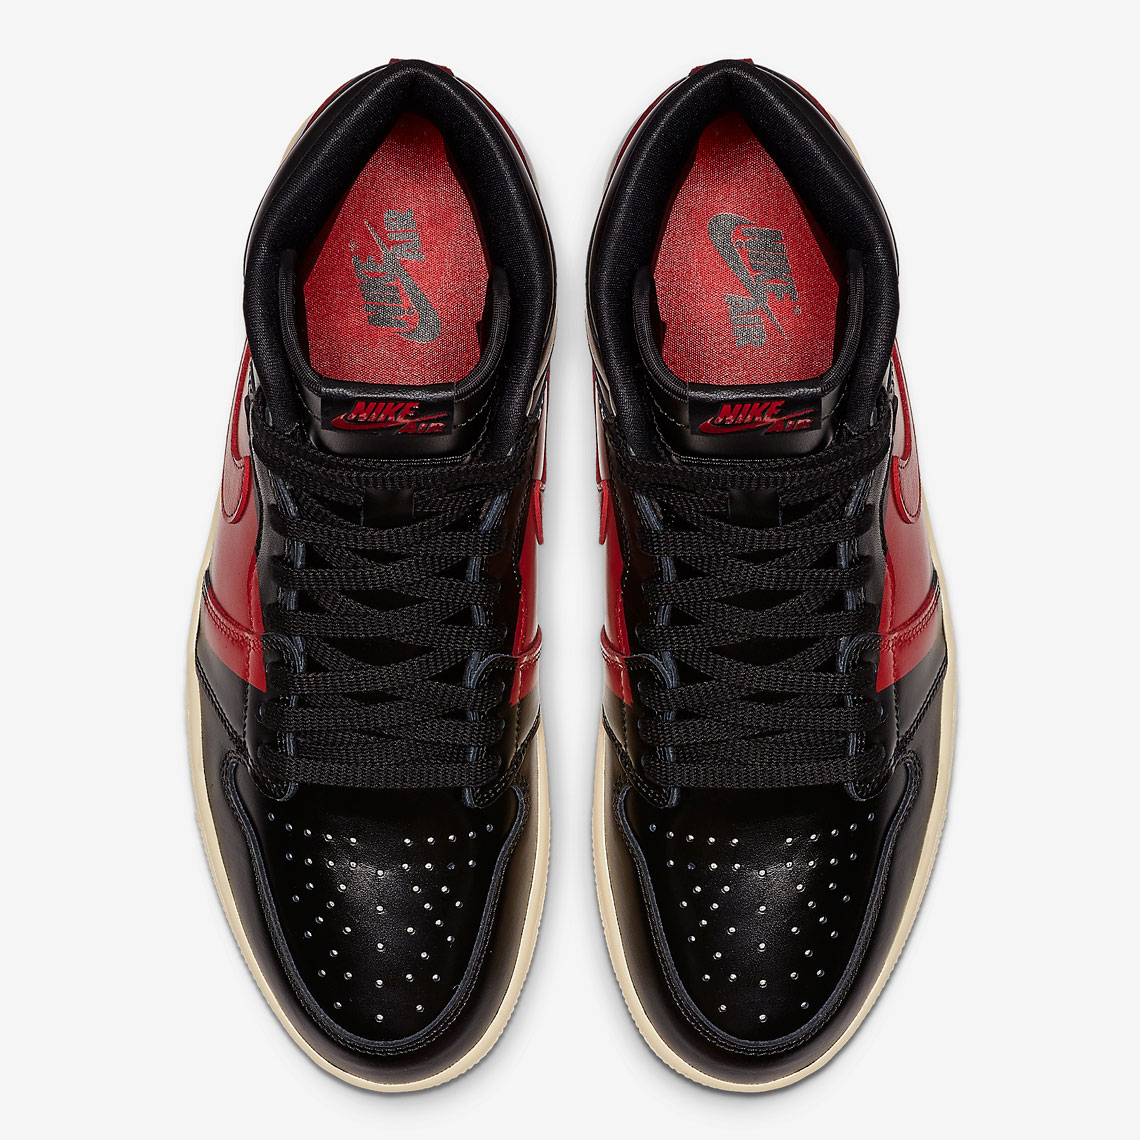 Jordan 1 Couture Defiant BQ6682-006 - Release Info | SneakerNews.com